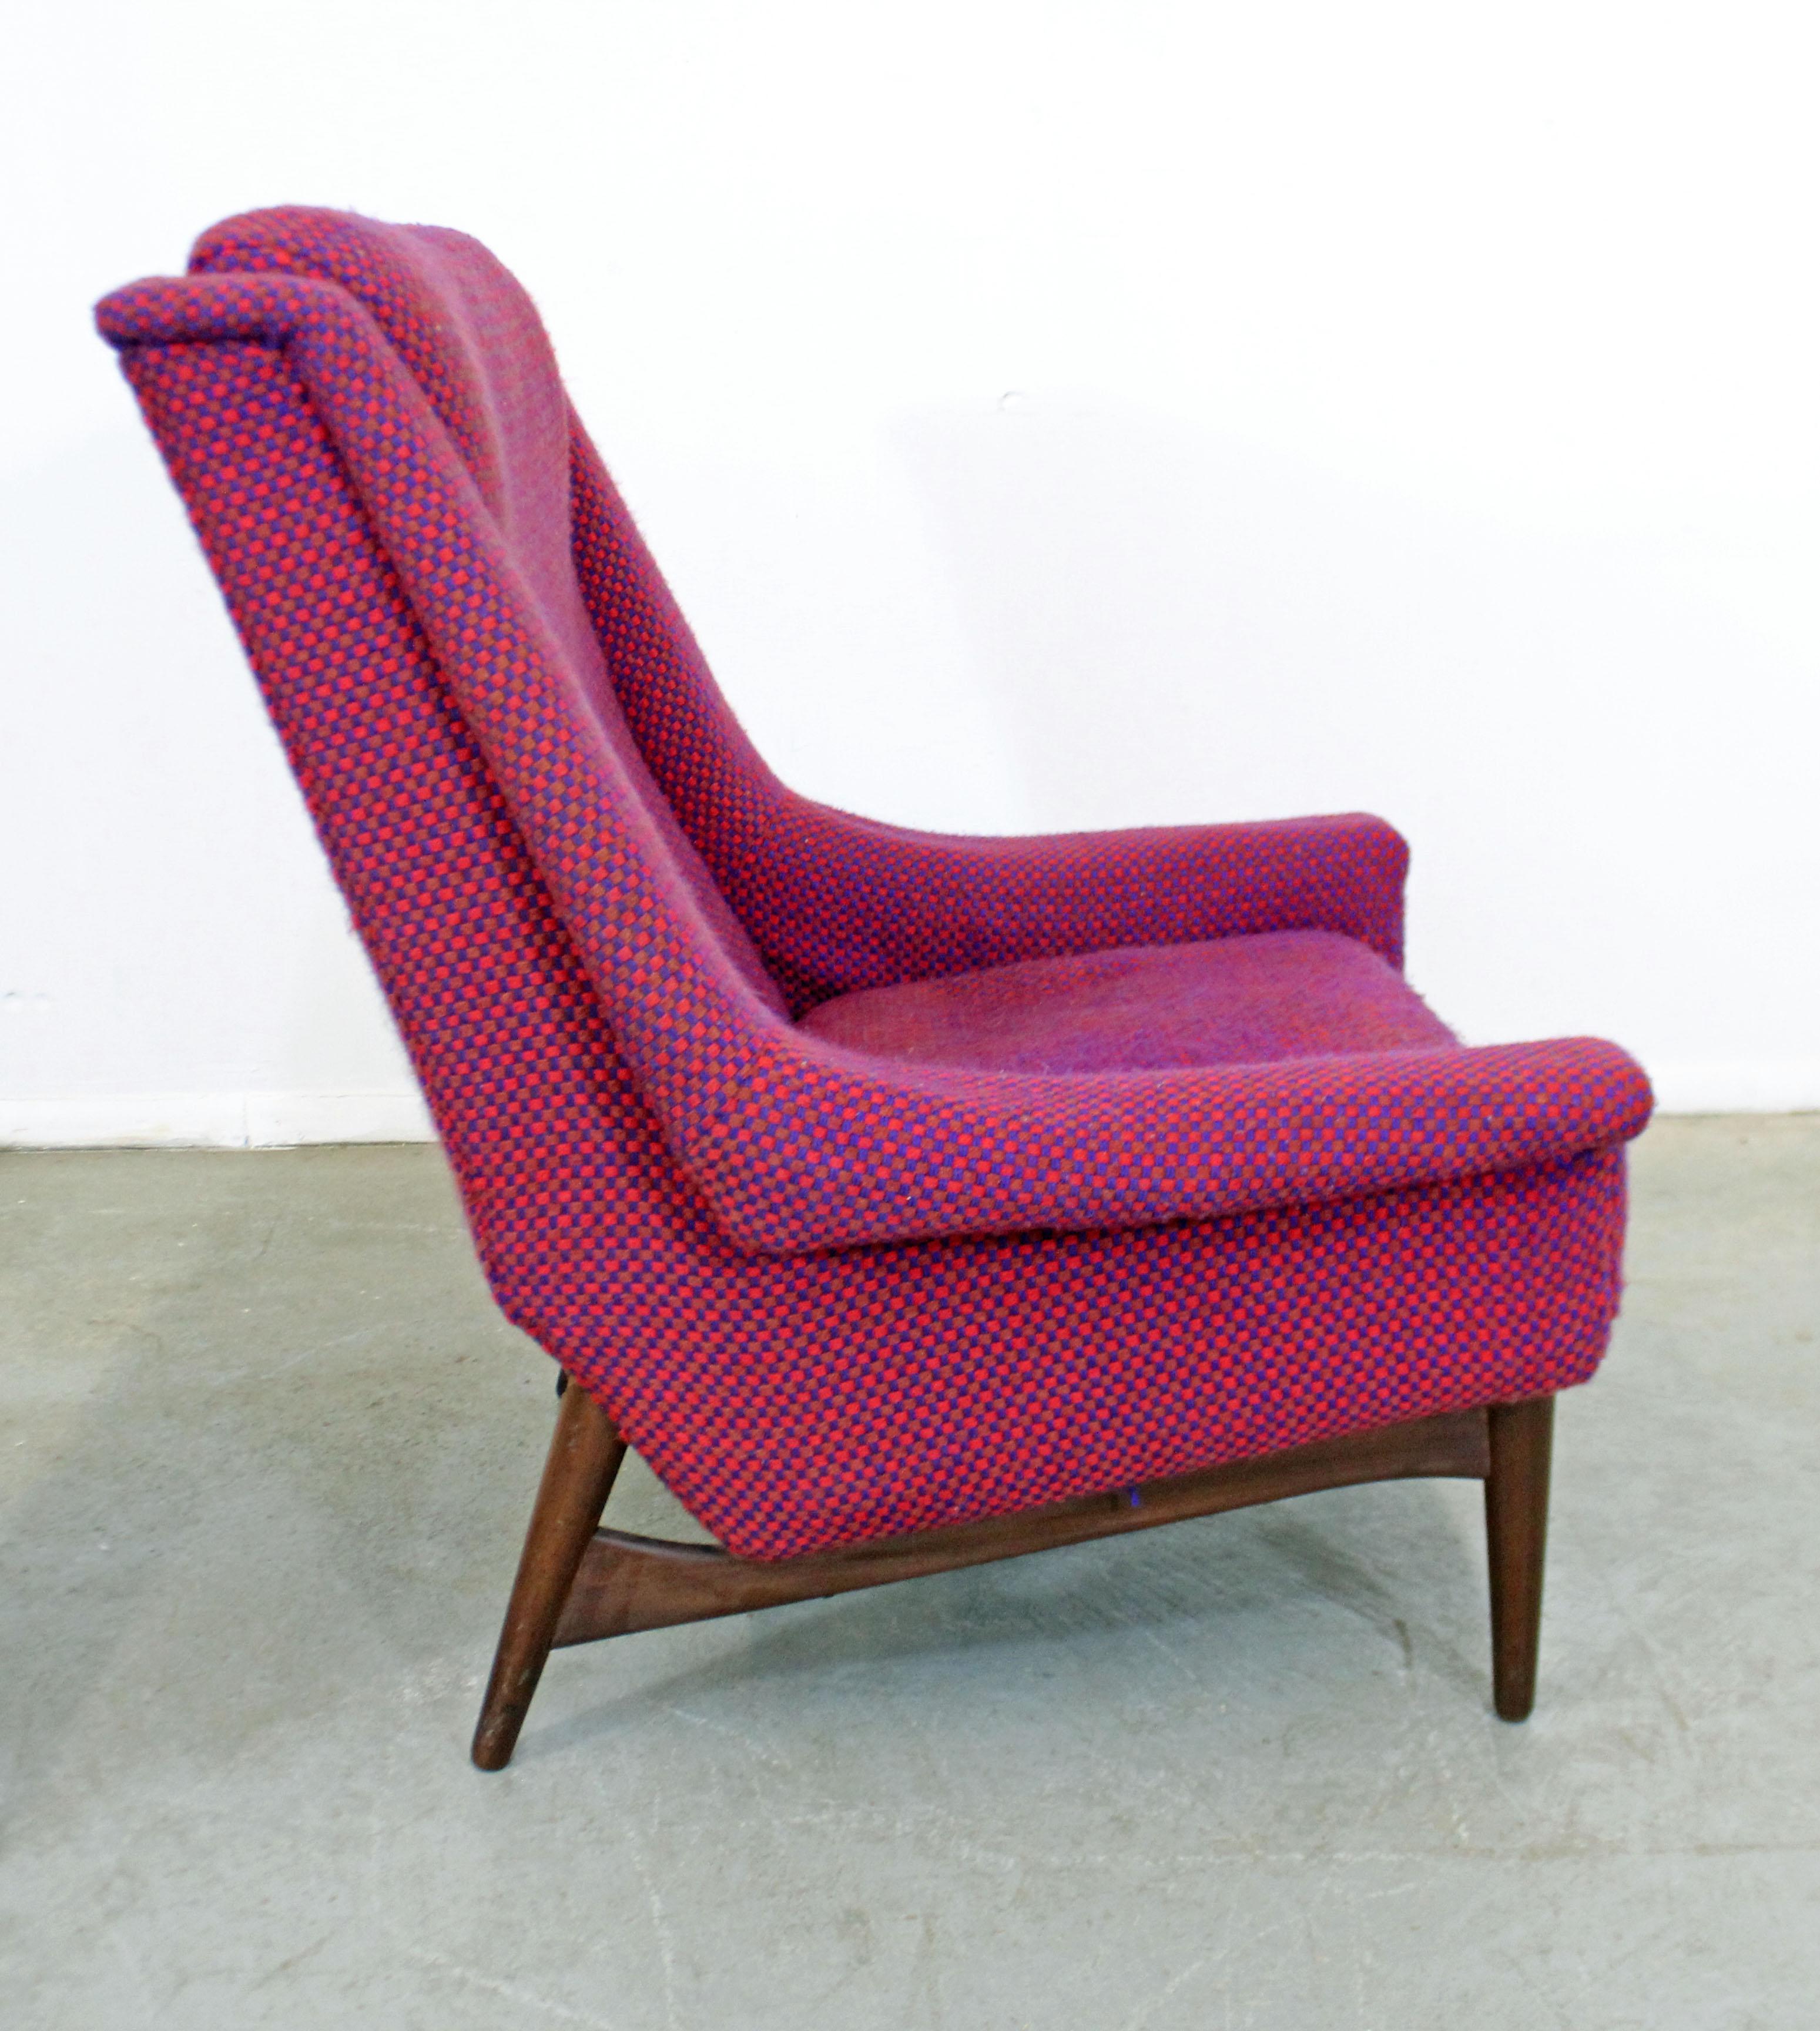 danish modern chair and ottoman